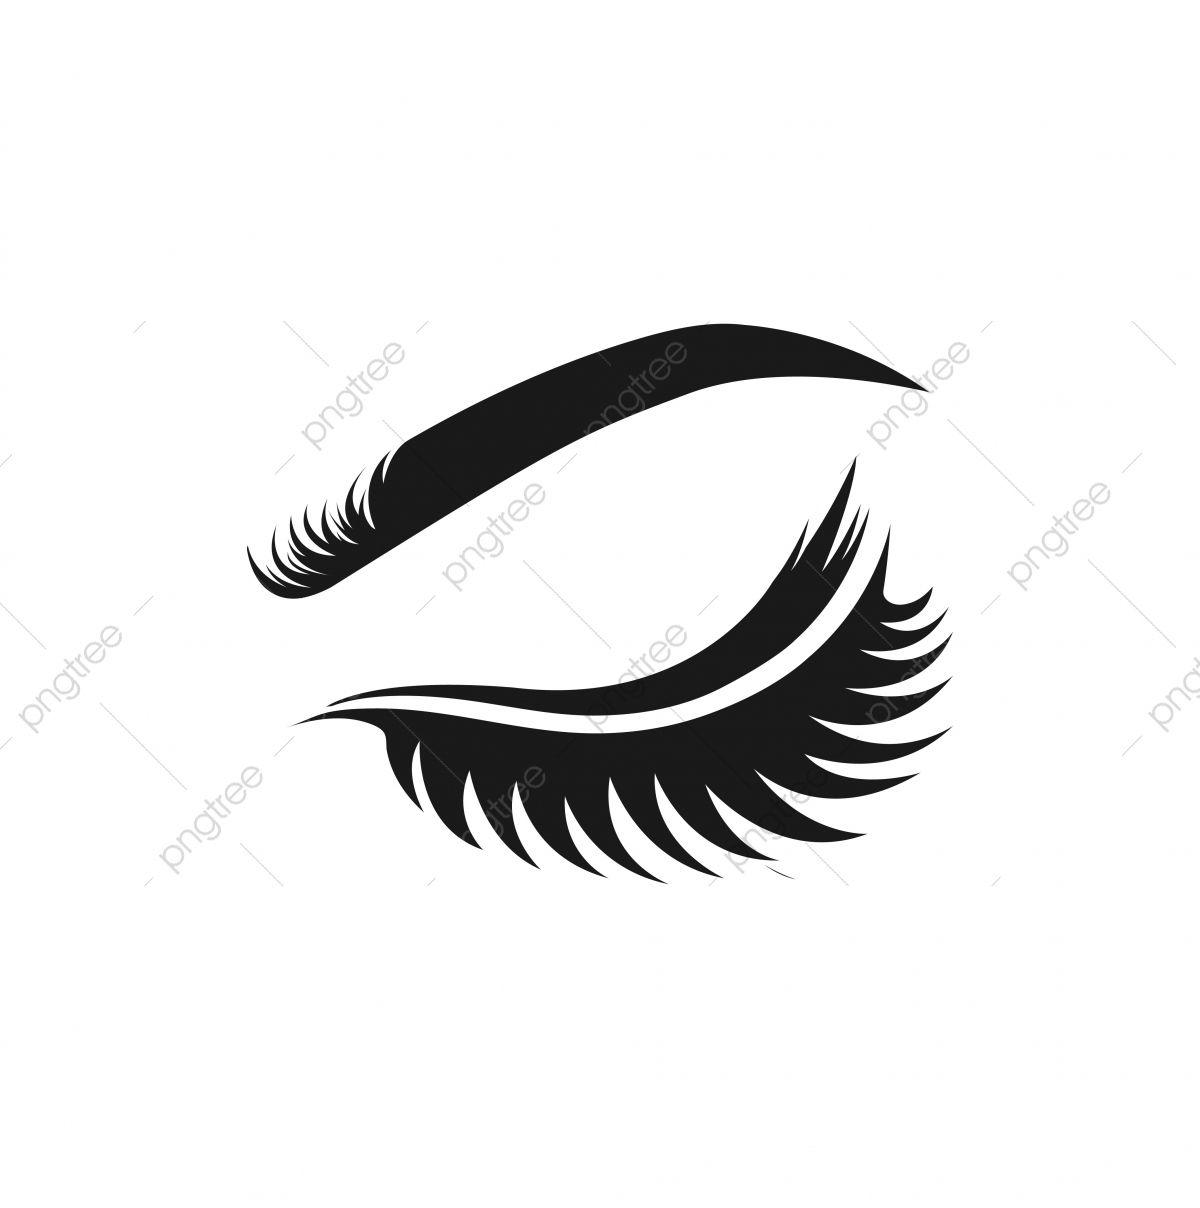 Eyelasshes Logo - Eyelashes Logo Design Vector, Makeup, Design, Art PNG and Vector ...